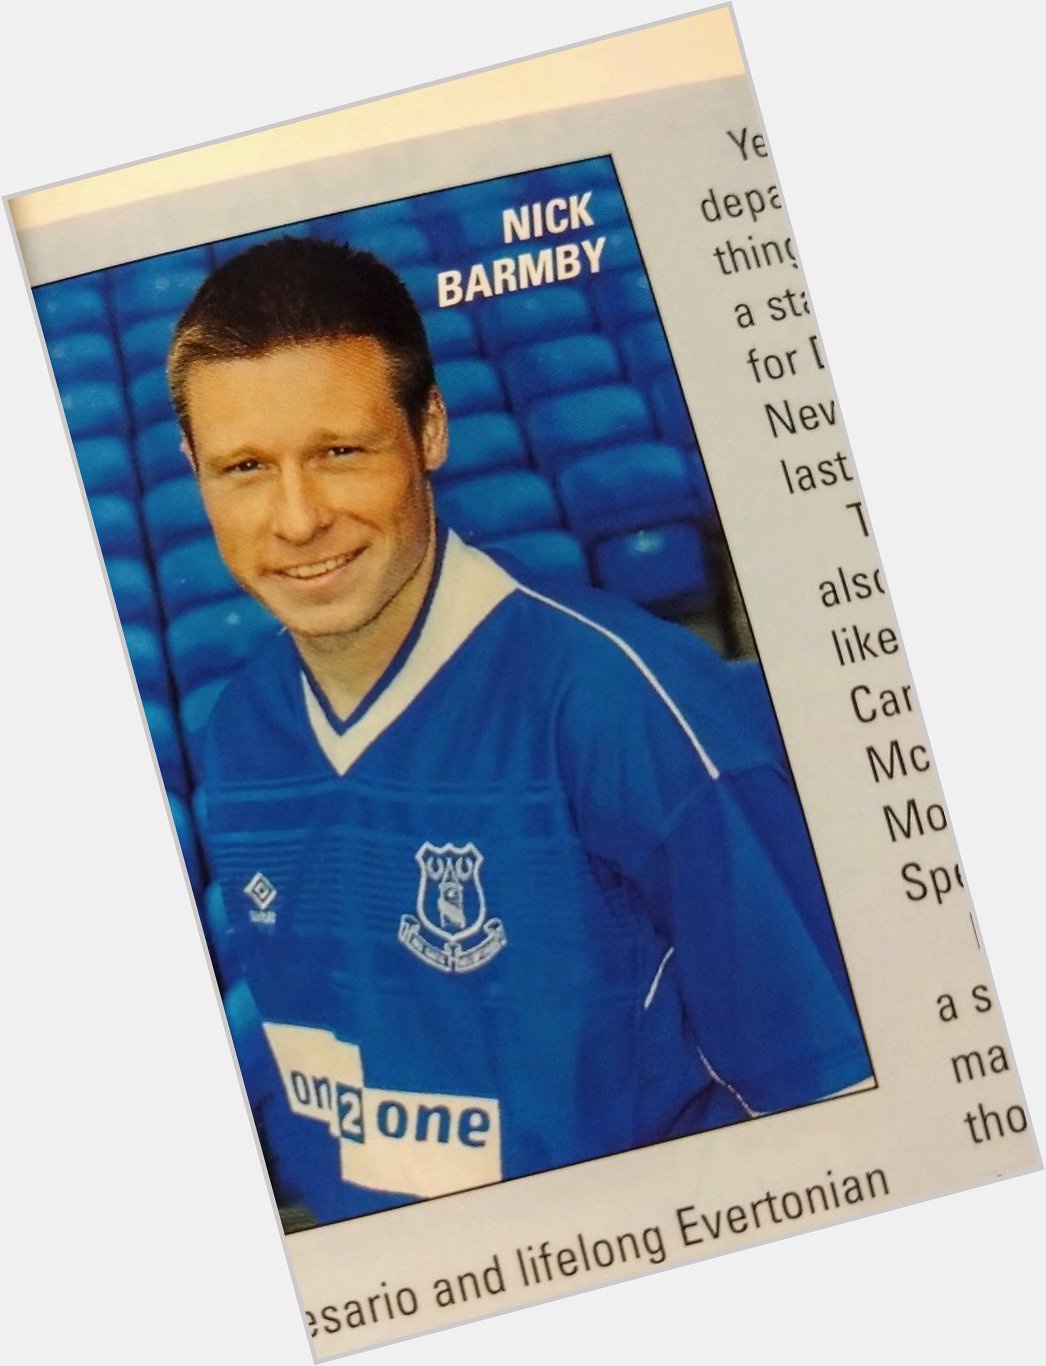 Happy birthday to former player Nick Barmby. 